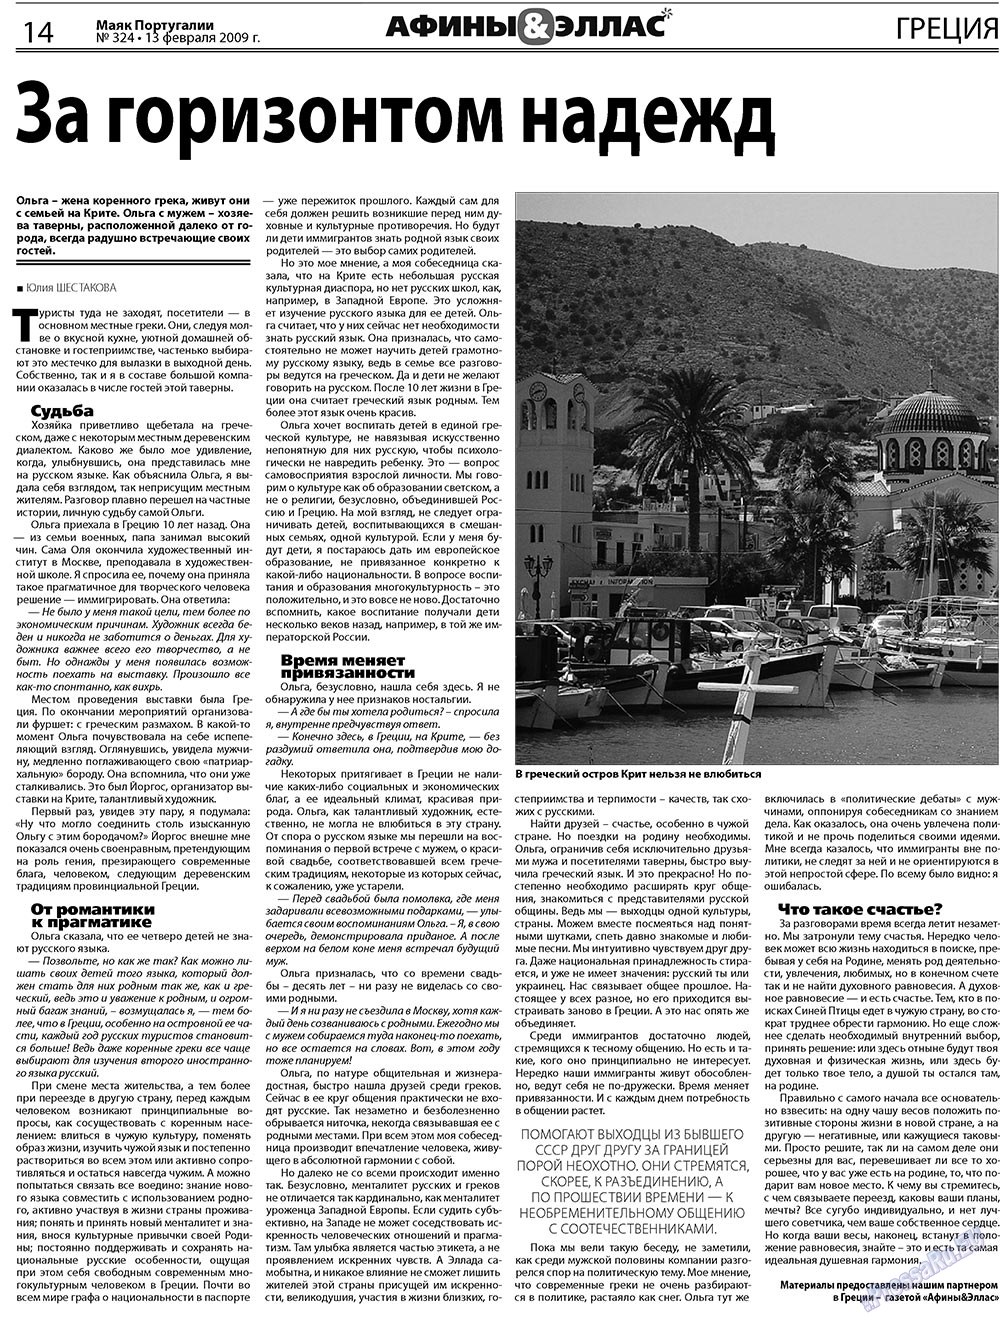 Маяк Португалии, газета. 2009 №7 стр.14